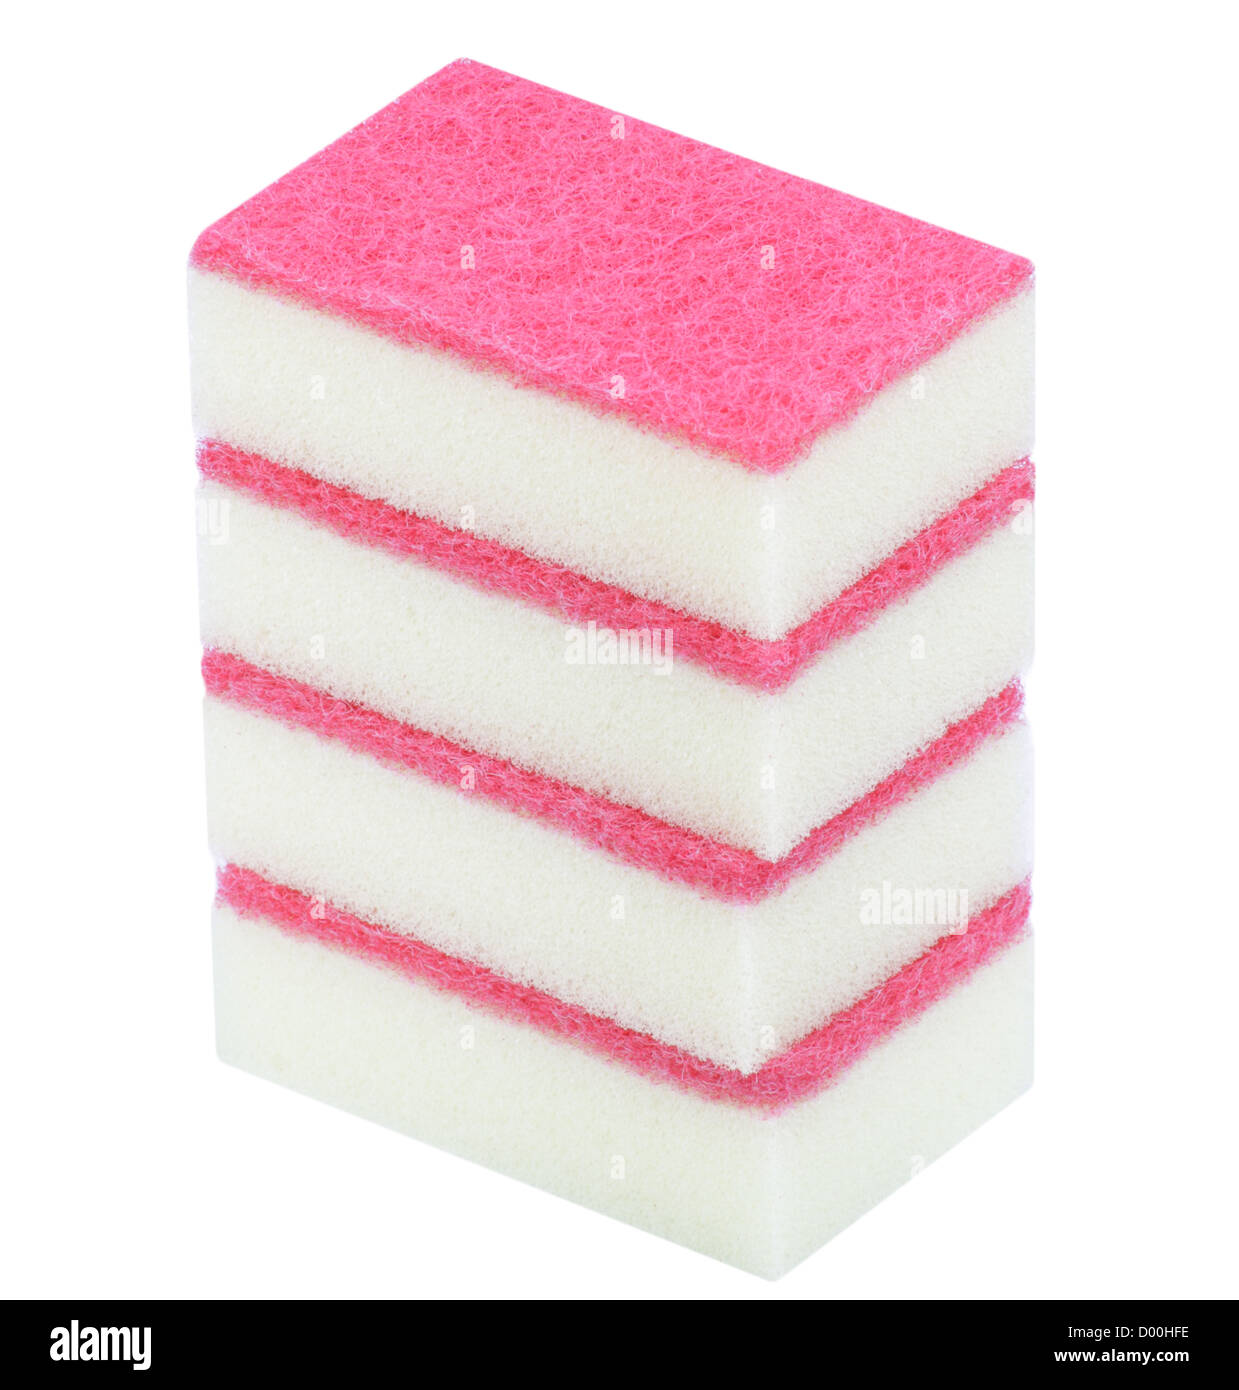 four foam rubber sponge isolated Stock Photo